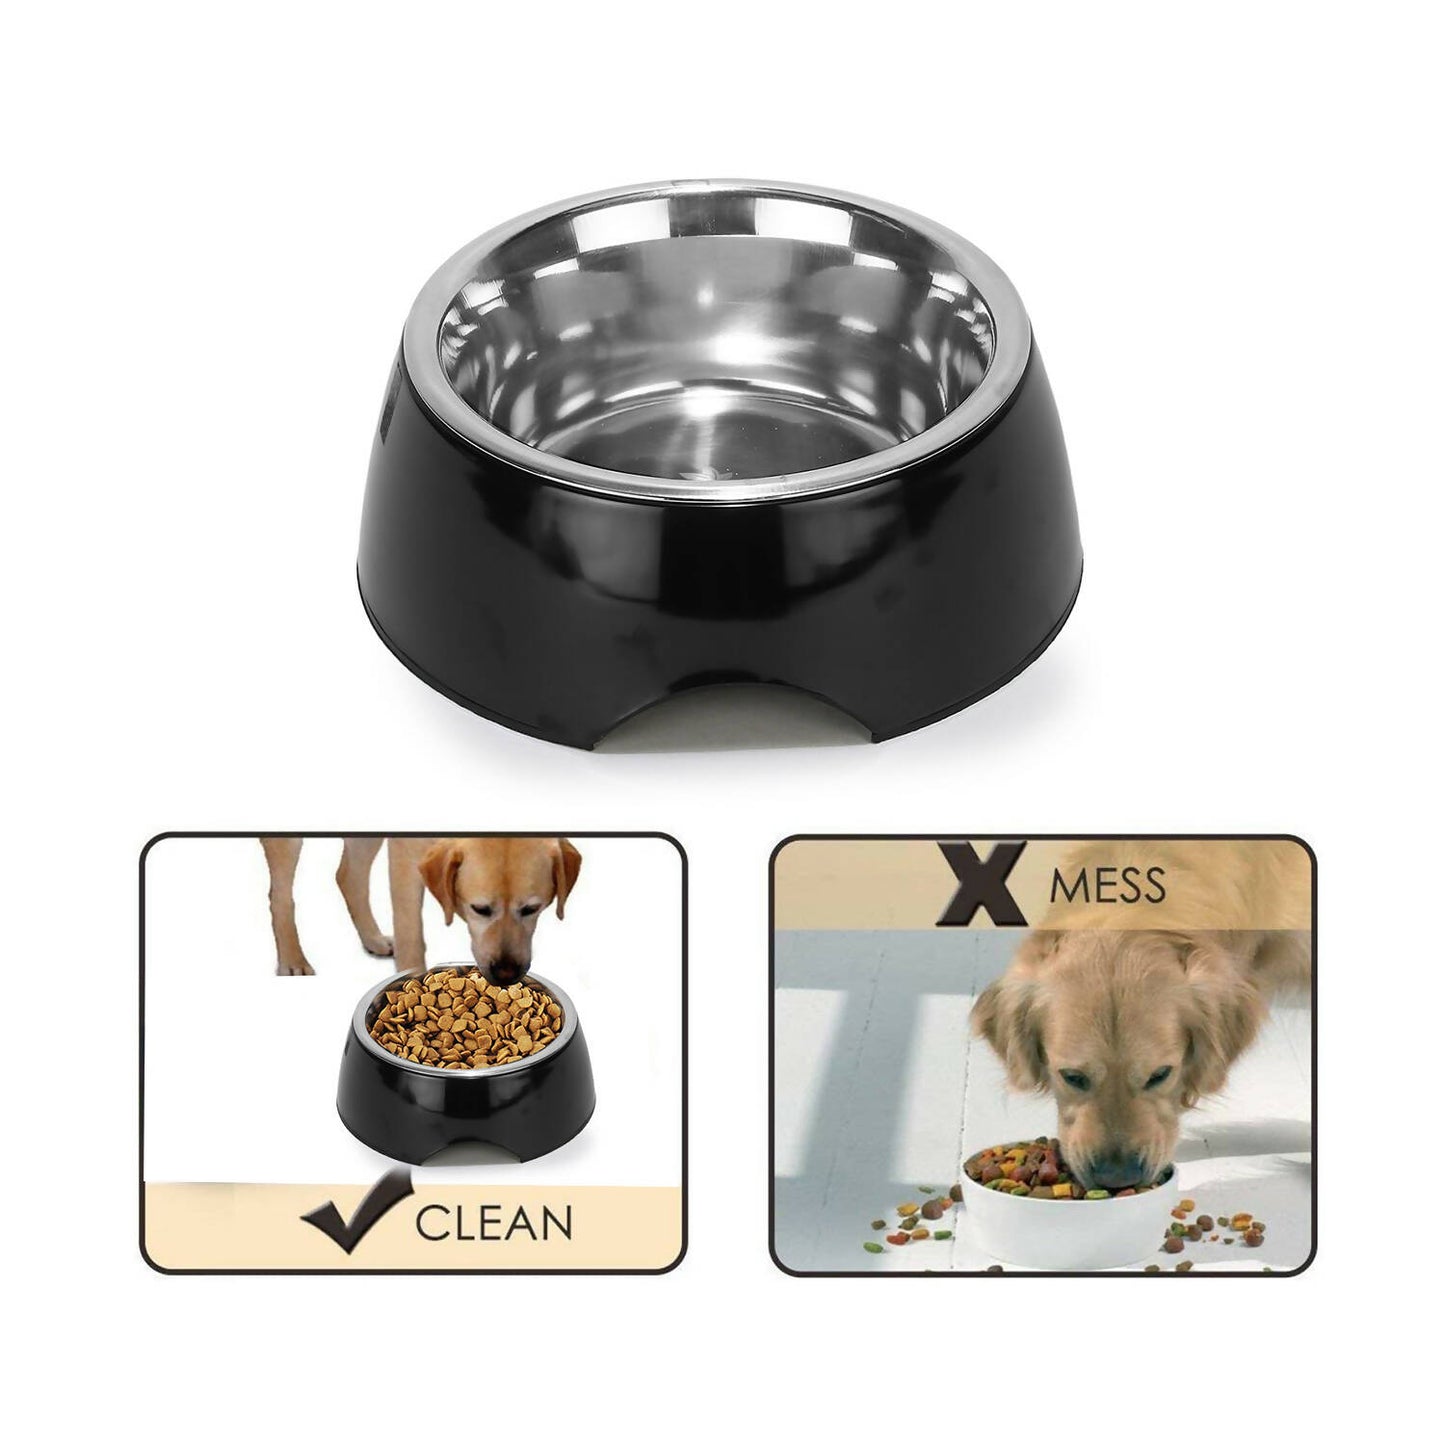 Basil - Bowl Melamine Solid For Dogs